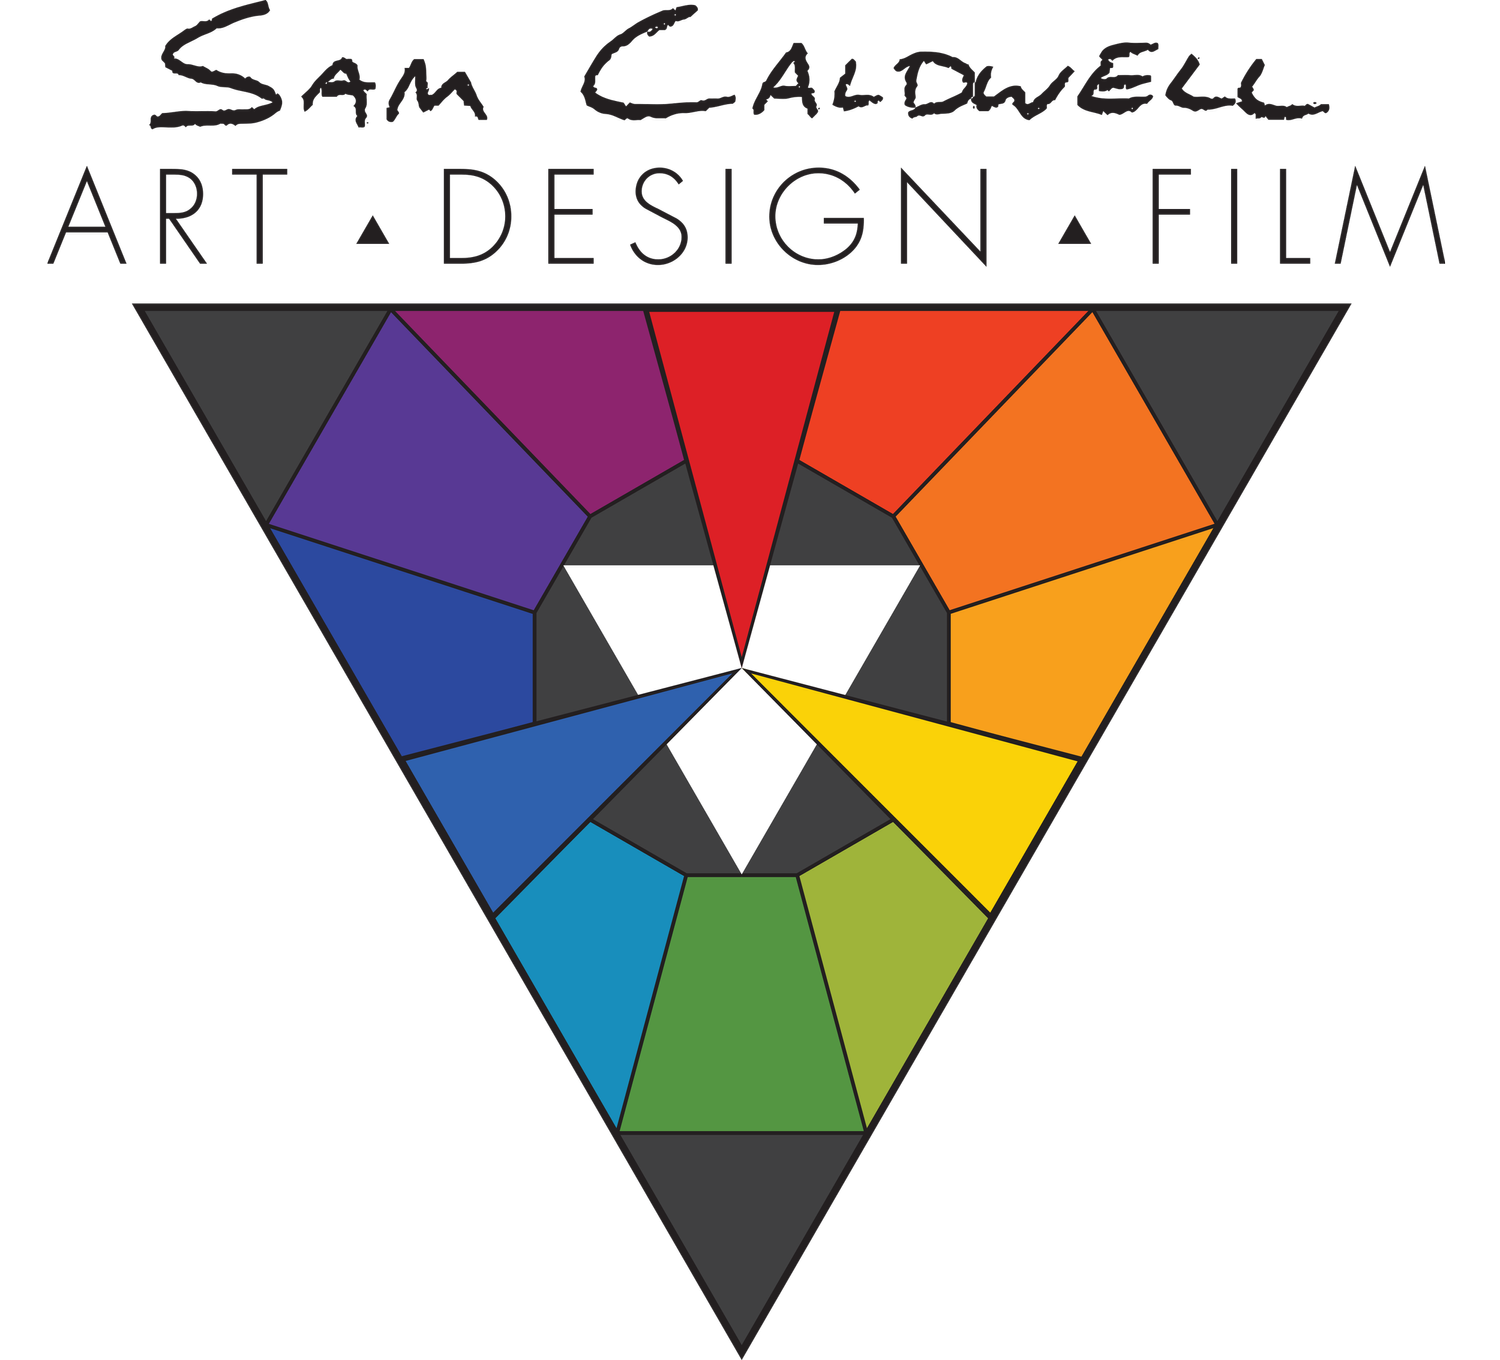 Sam Caldwell